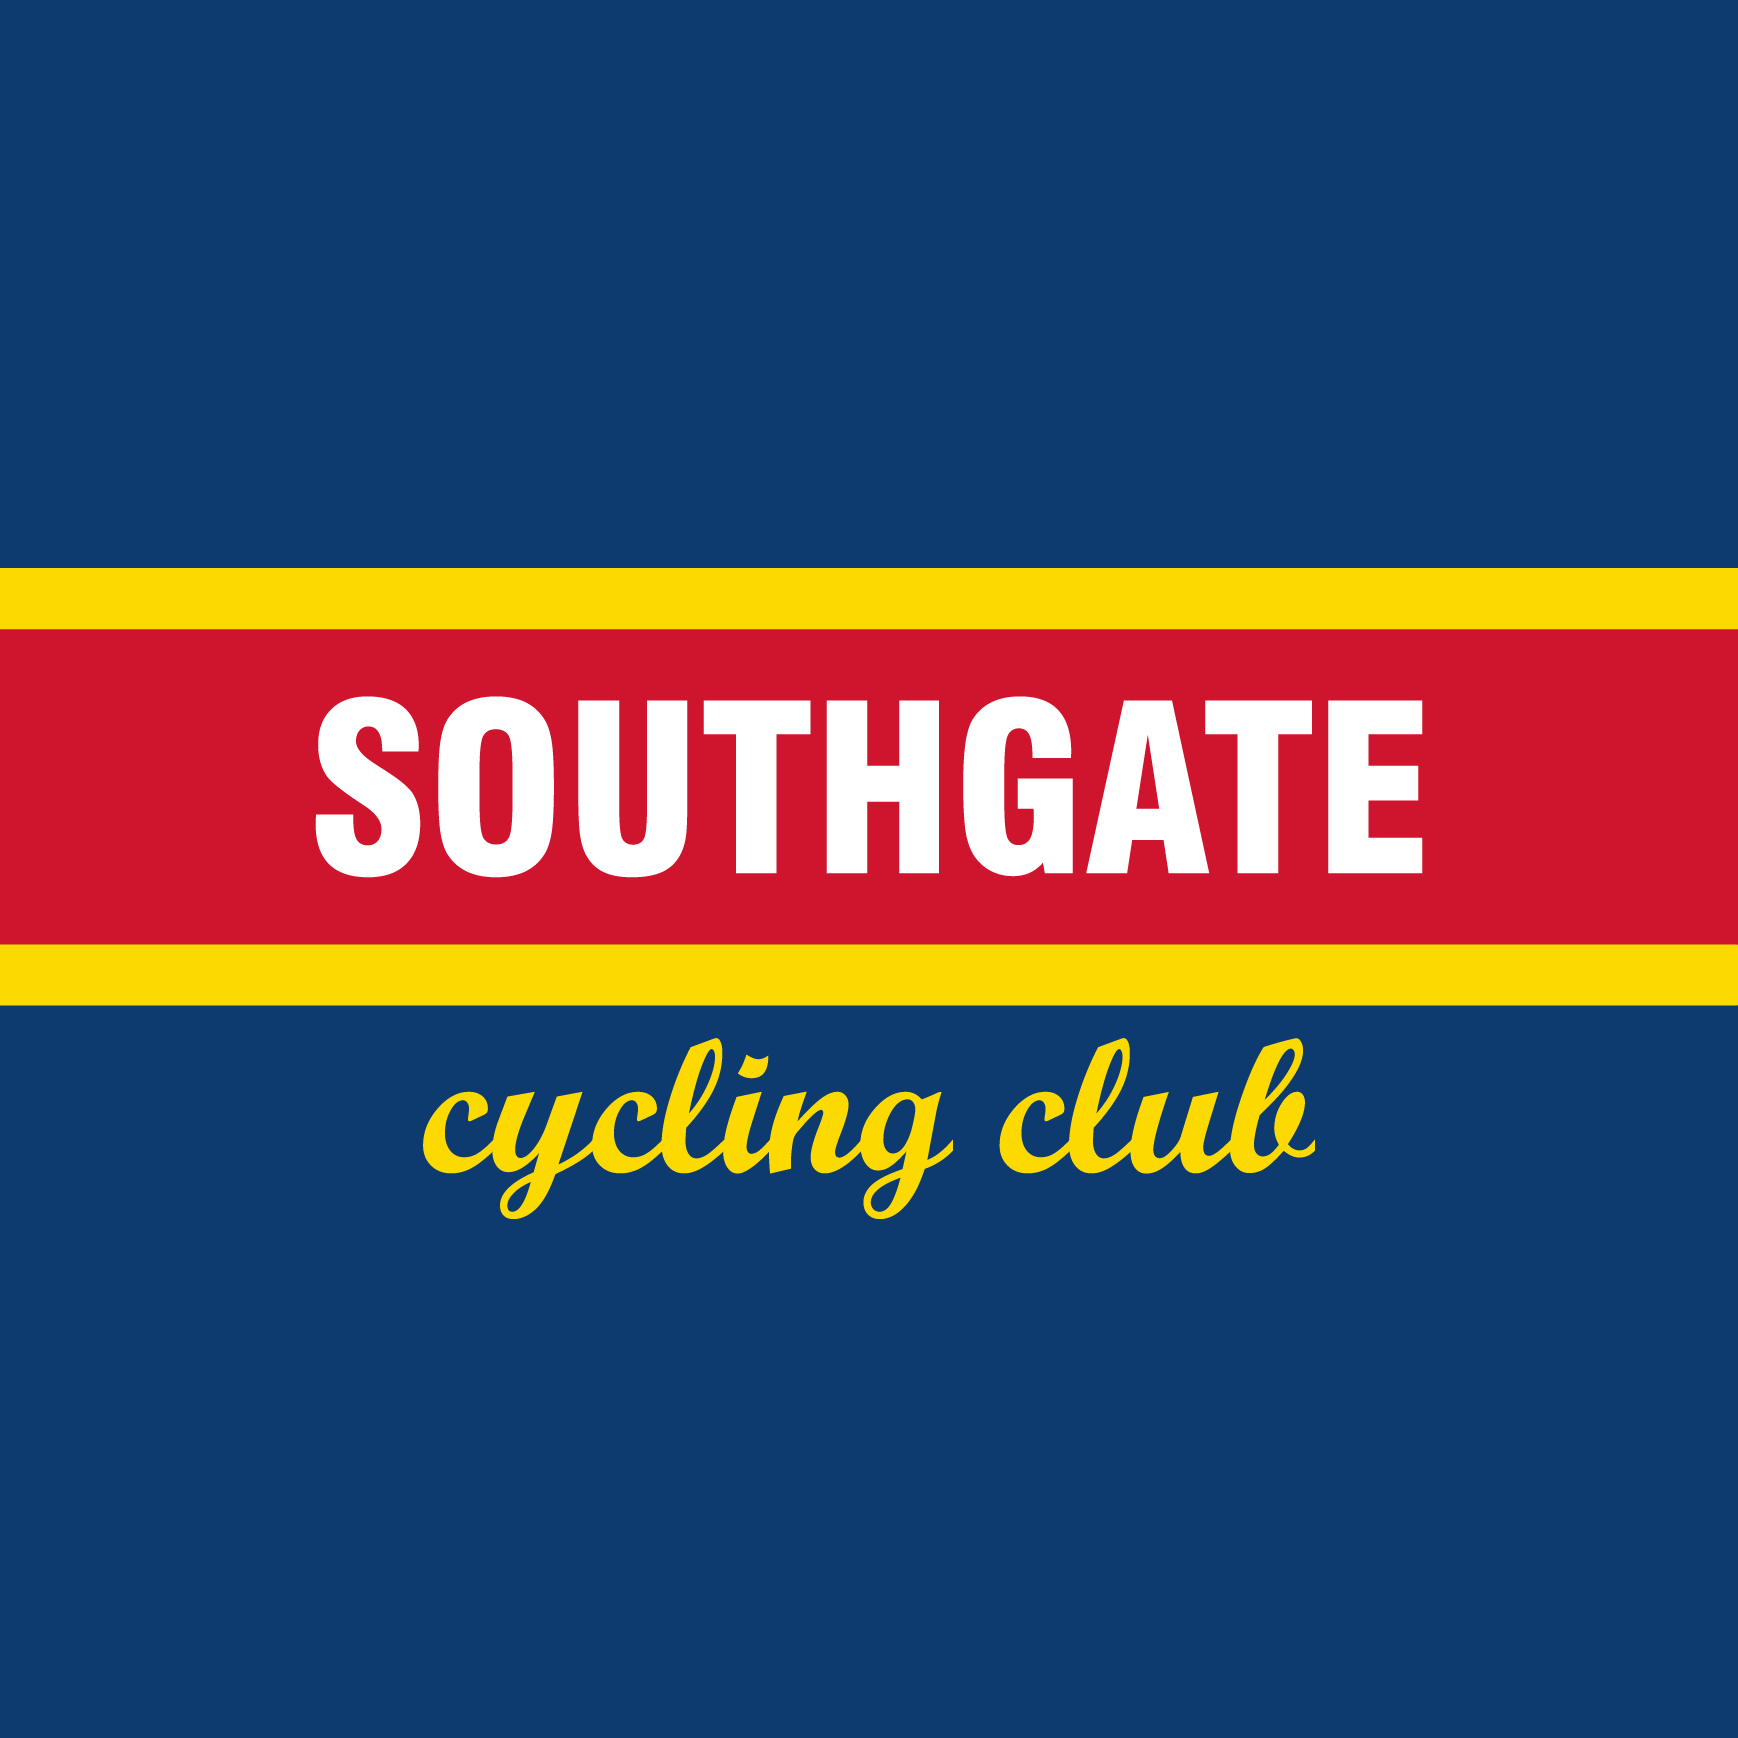 Club Image for SOUTHGATE CC